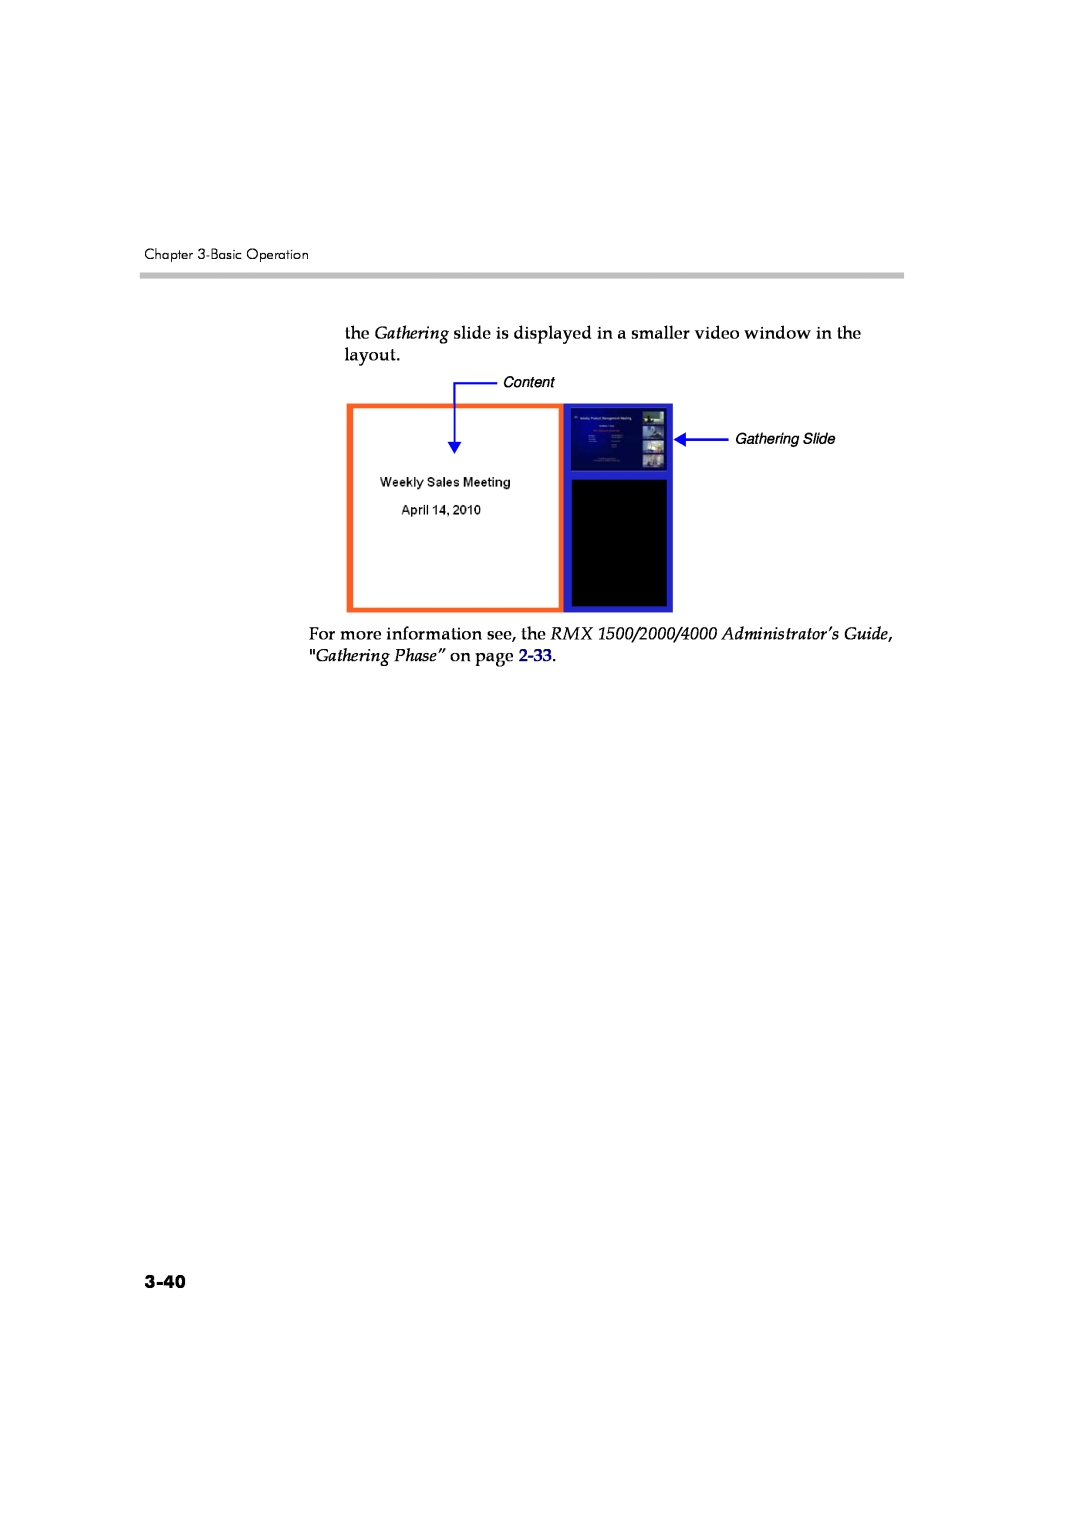 Polycom DOC2560A manual 3-40, Basic Operation, Content Gathering Slide 